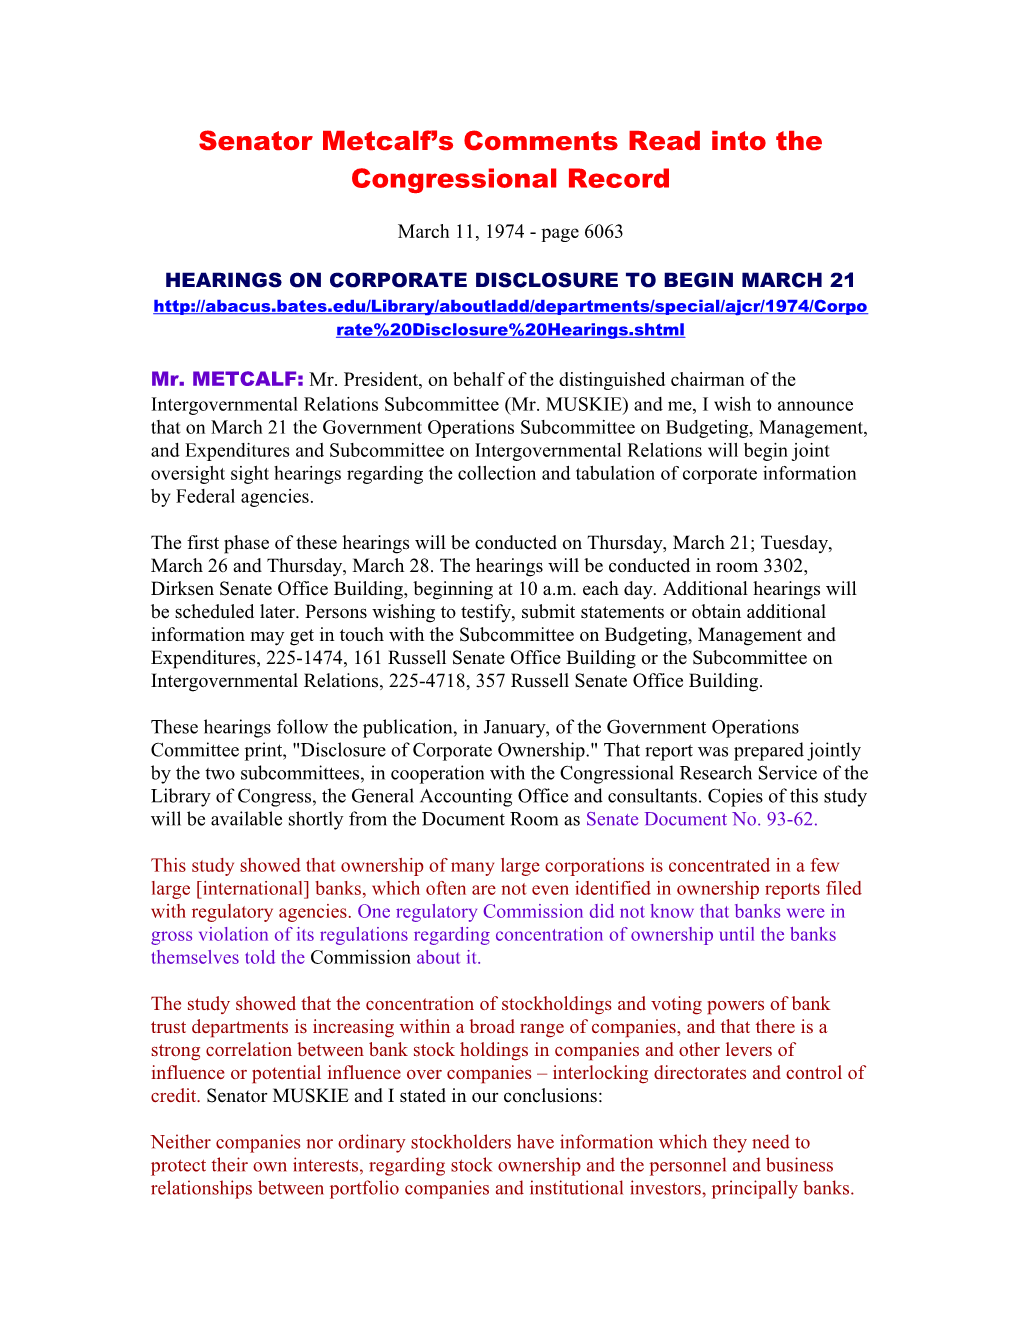 Senator Metcalf S Comments Read Into the Congressional Record